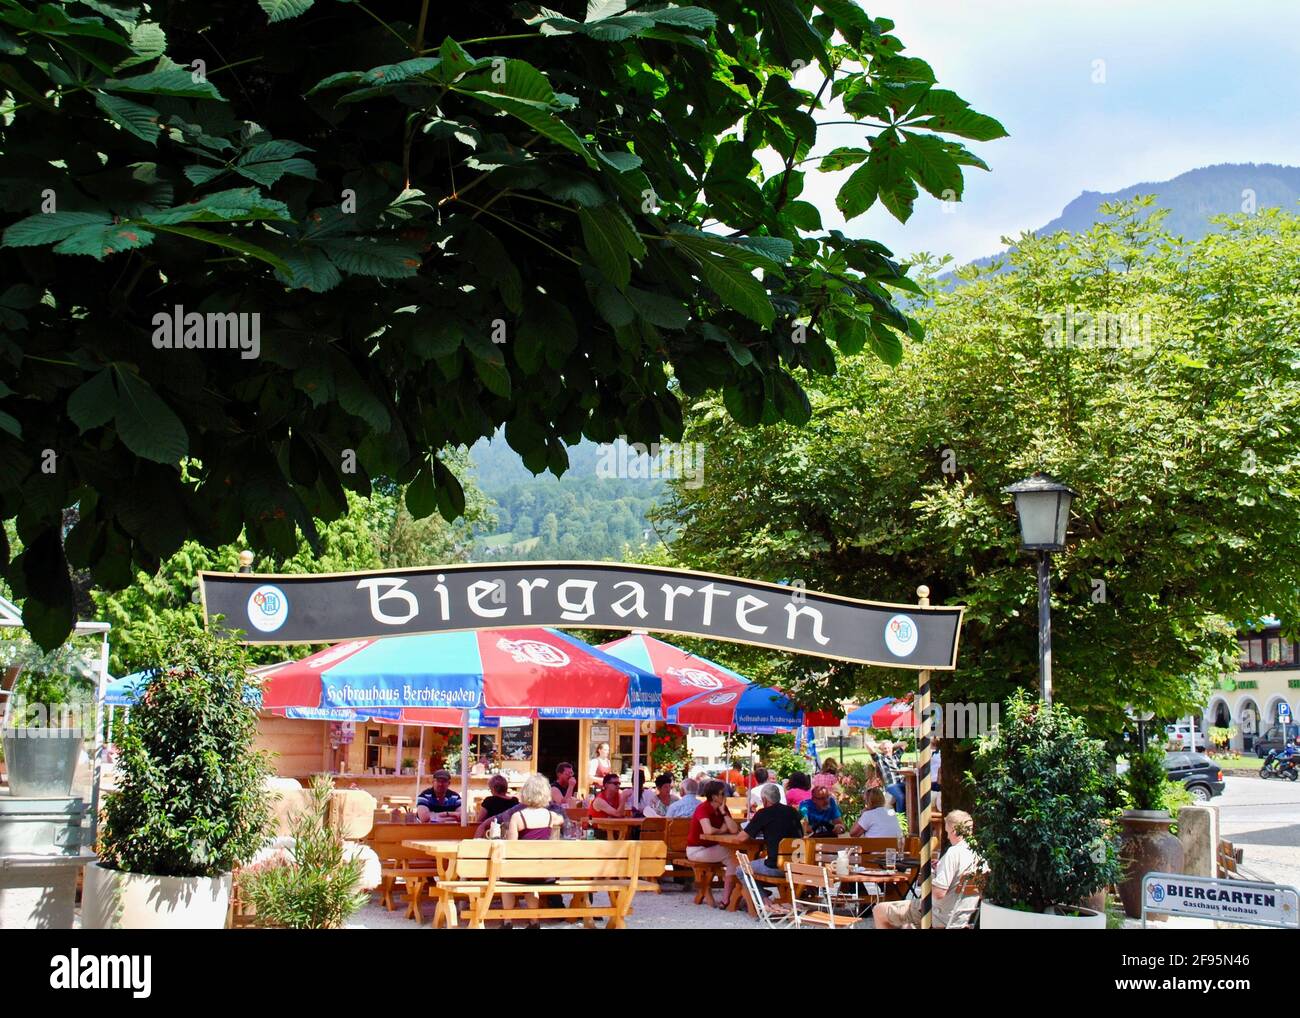 Berchtesgaden, Germania: Un tradizionale biergarten tedesco (Giardino della birra) in Baviera. Ombrelli letti 'Hofbrauhaus Berchtesgaden' (birreria Berchtesgaden) Foto Stock